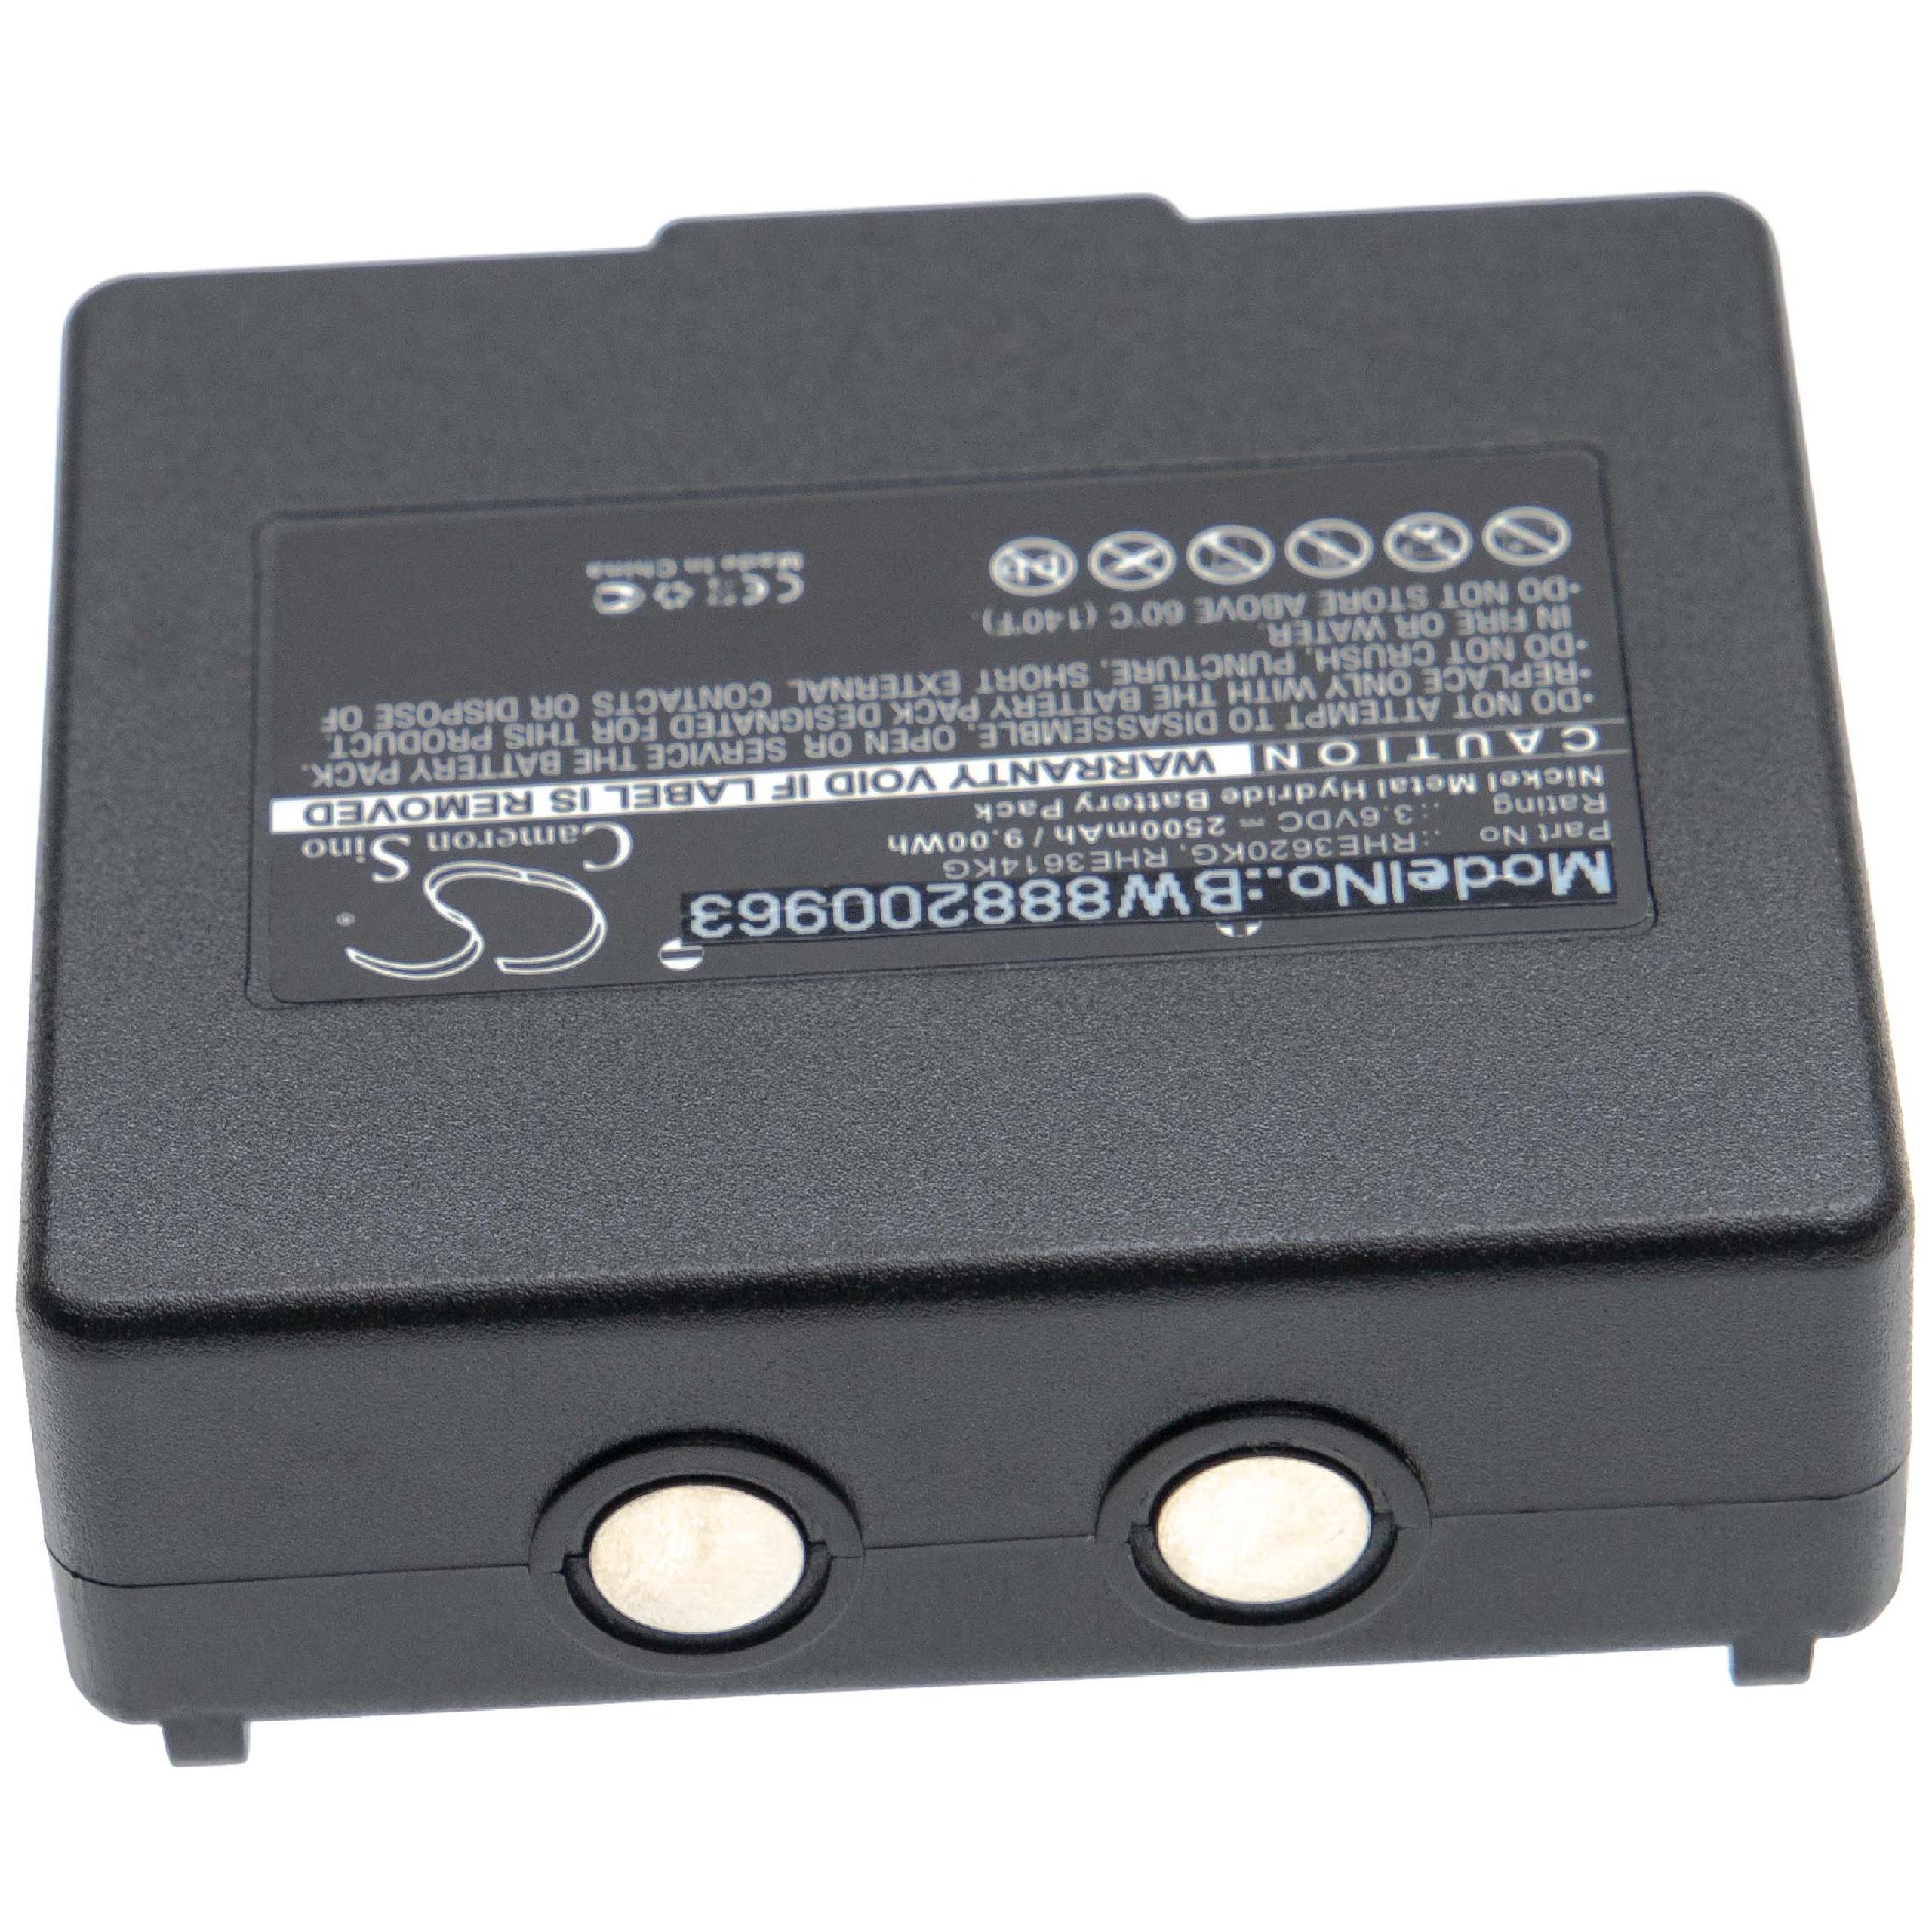 Batteria per radiocomando industriale sostituisce Abitron KH68300990, EX2-22 Hetronic - 2500mAh 3,6V NiMH